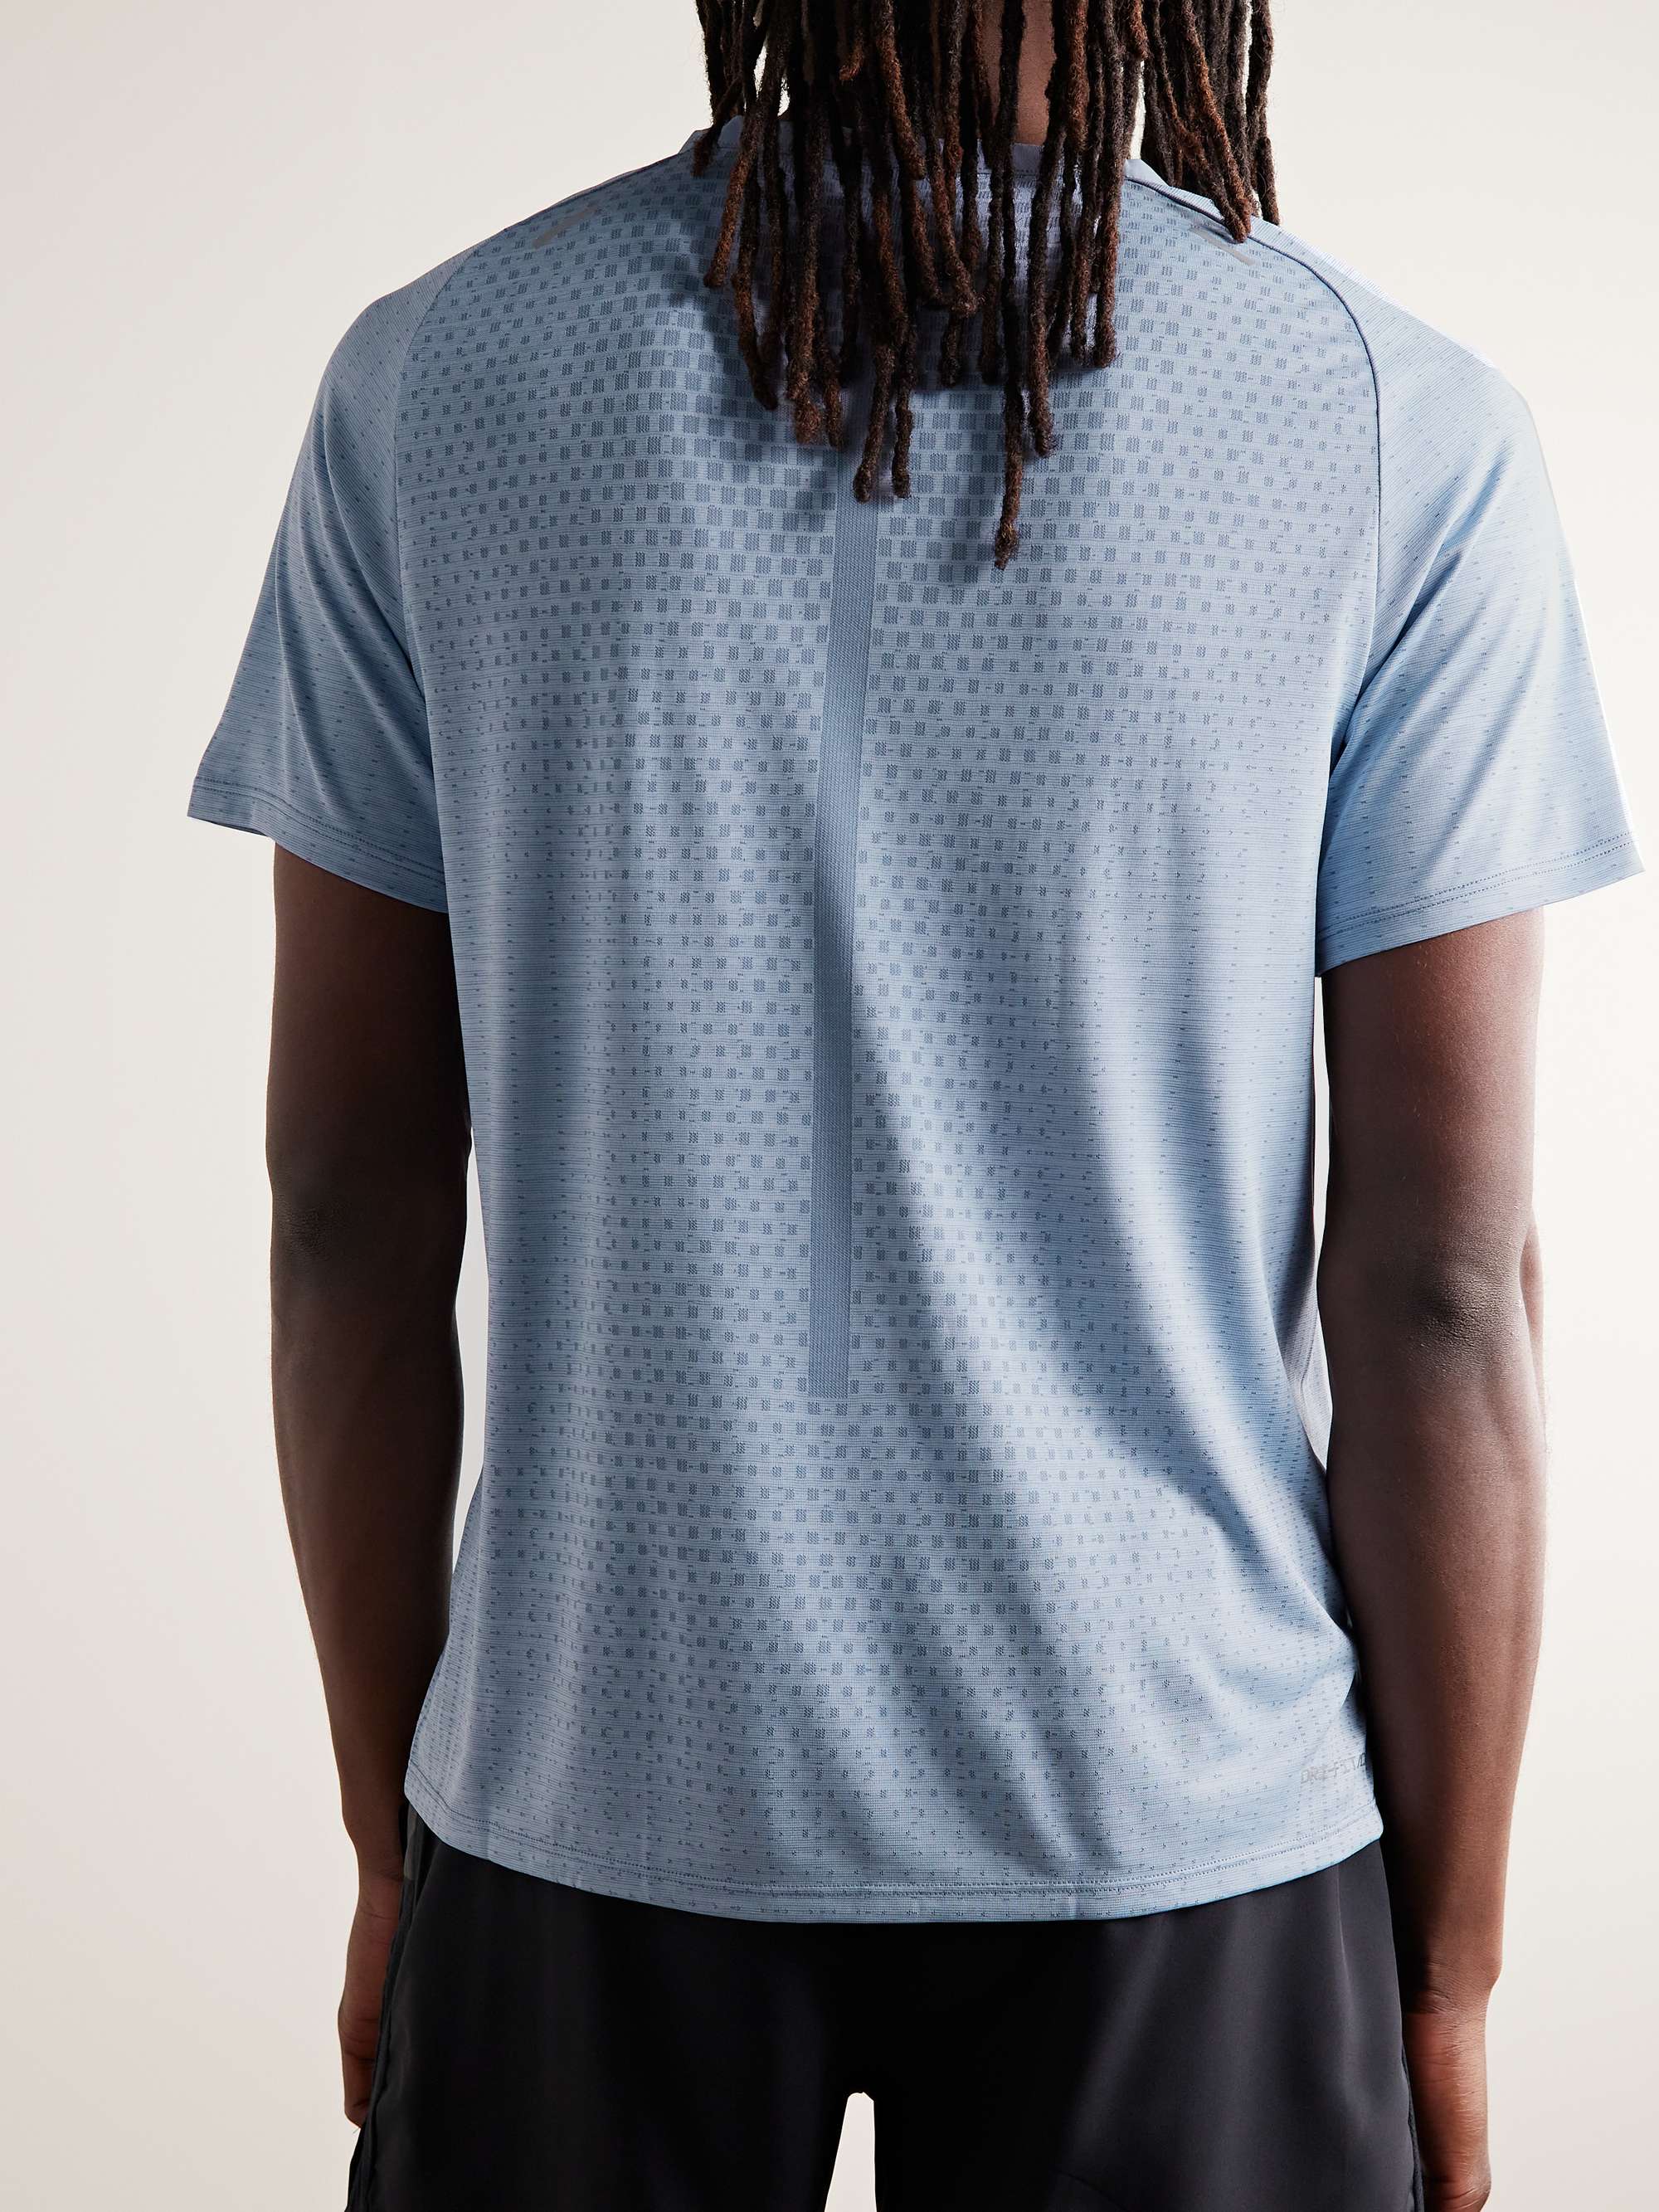 NIKE RUNNING Slim-Fit Dri-FIT ADV TechKnit T-Shirt for Men | MR PORTER